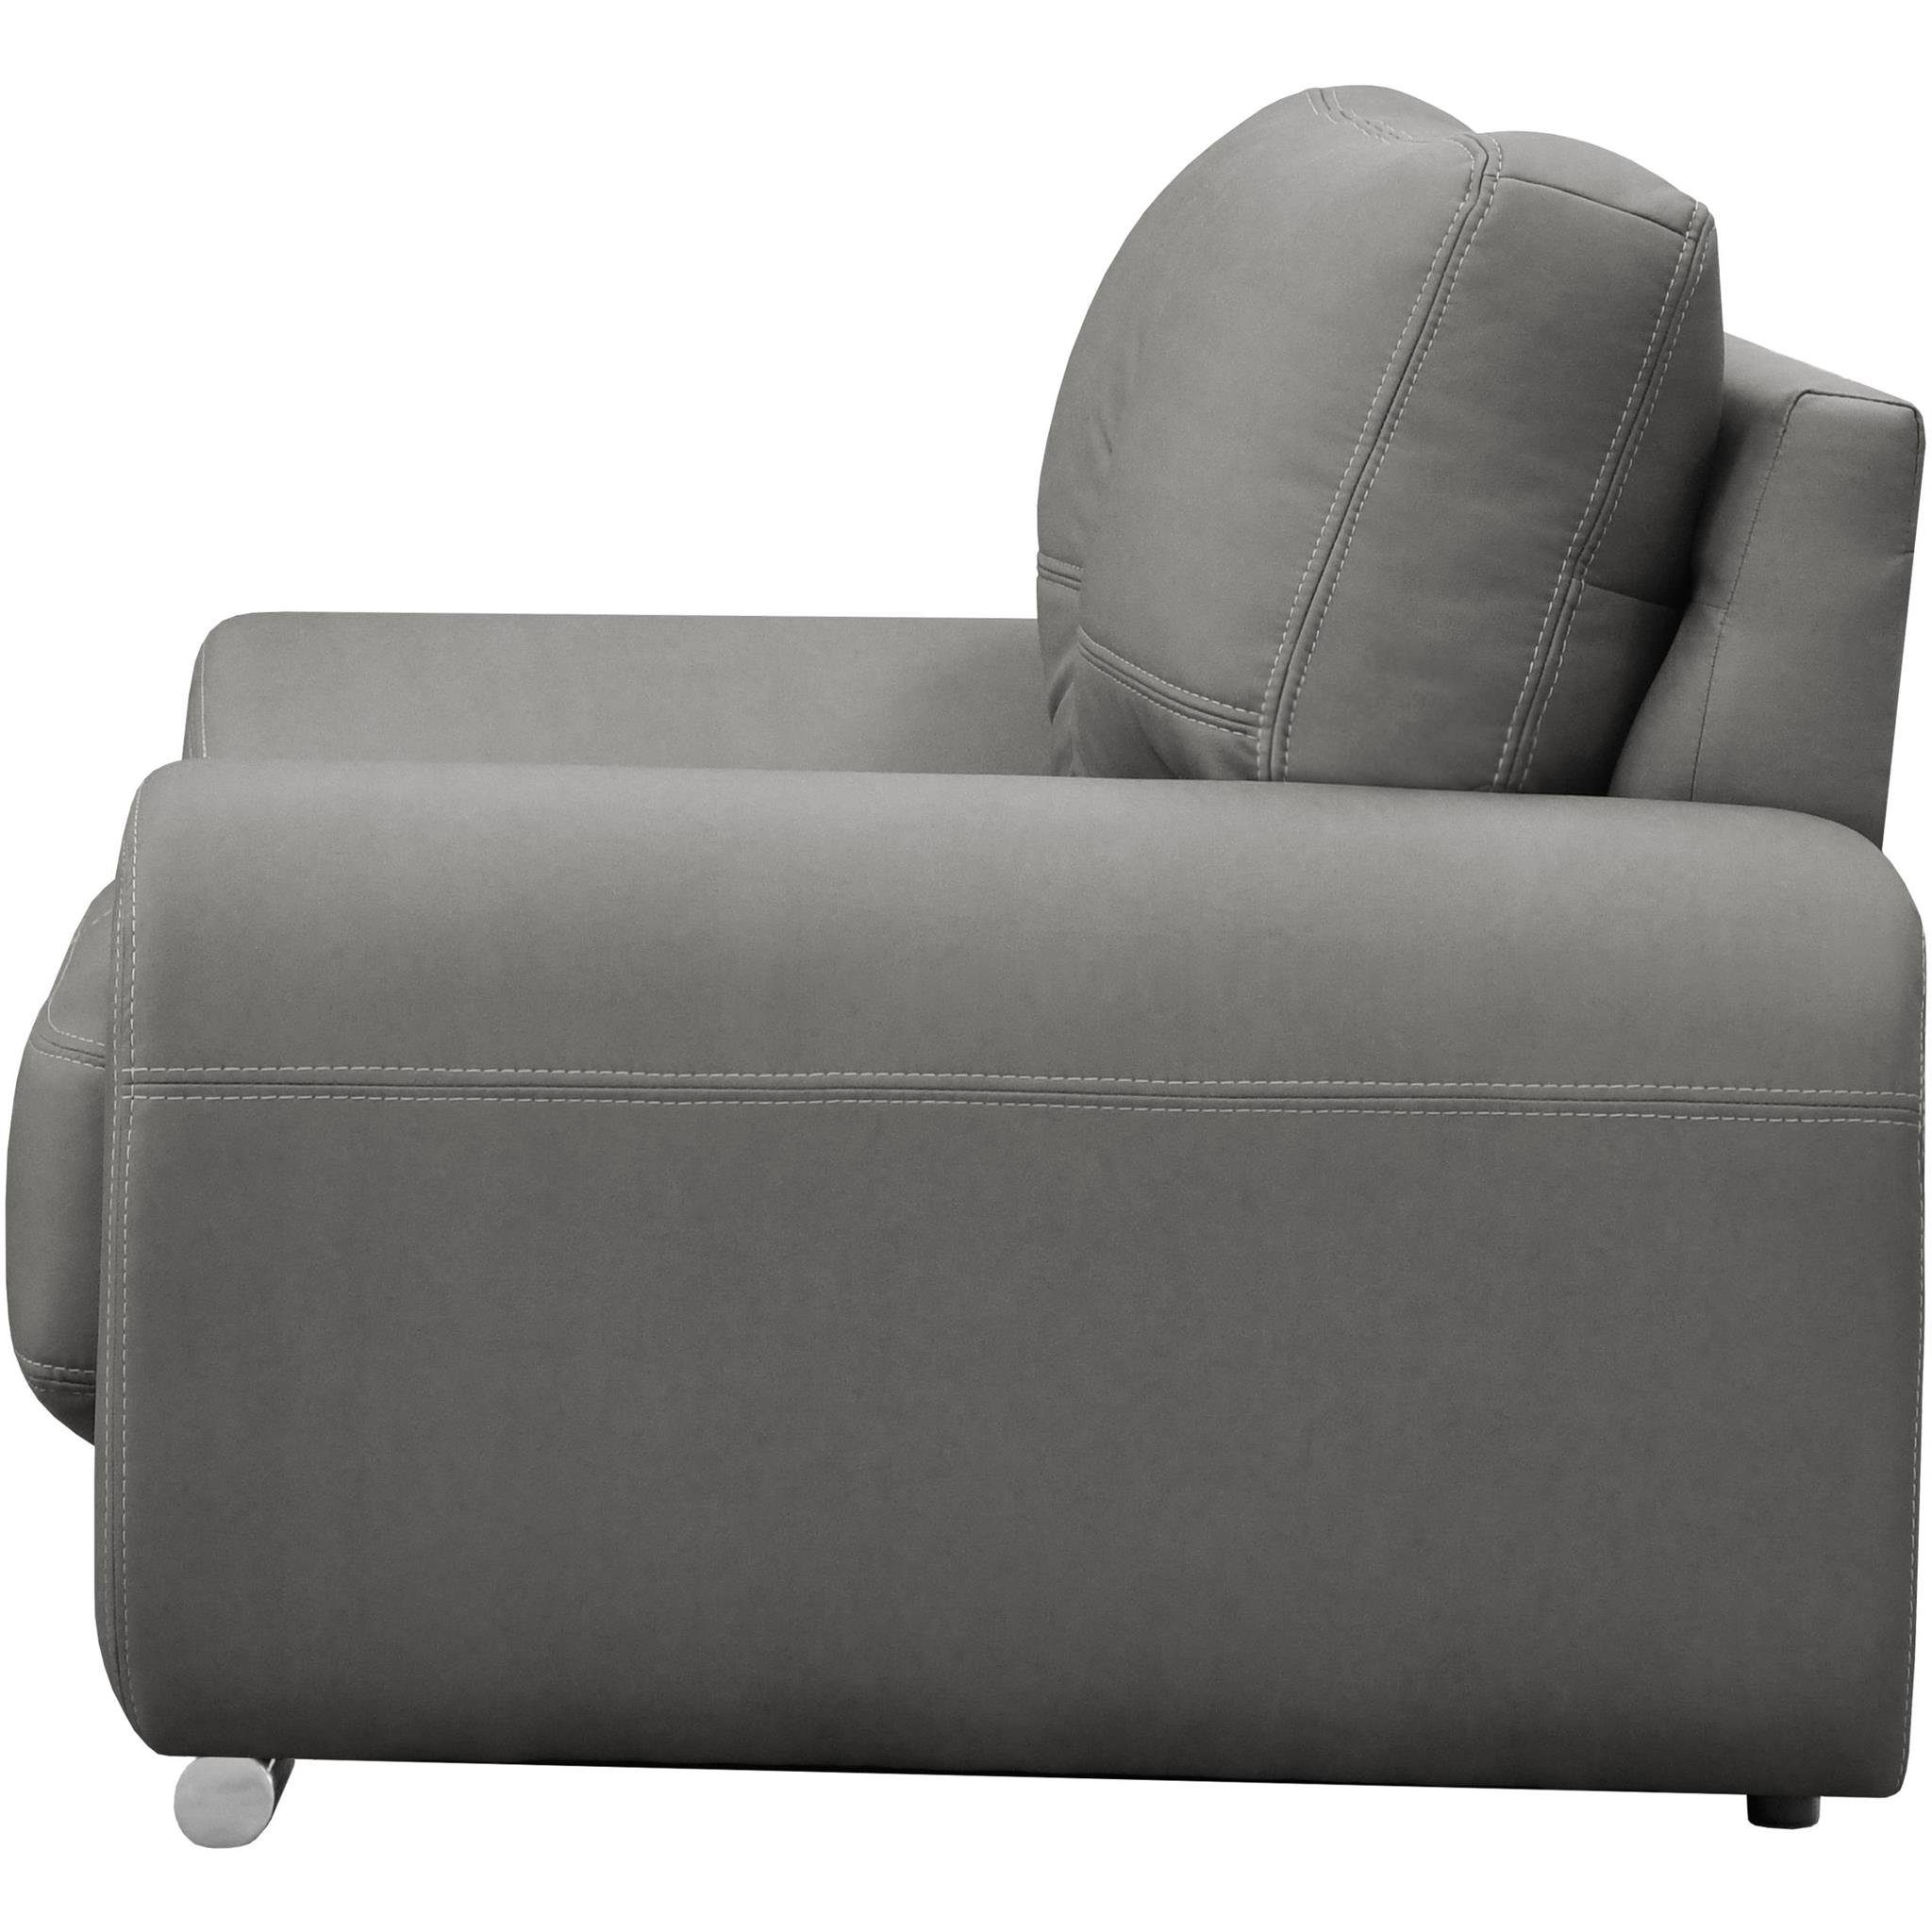 Beautysofa Sessel mit Grau modernes (Relaxsessel (vega 88) Kunstleder Maxime lux dekorativen im Design), mit Nähten, Wellenunterfederung